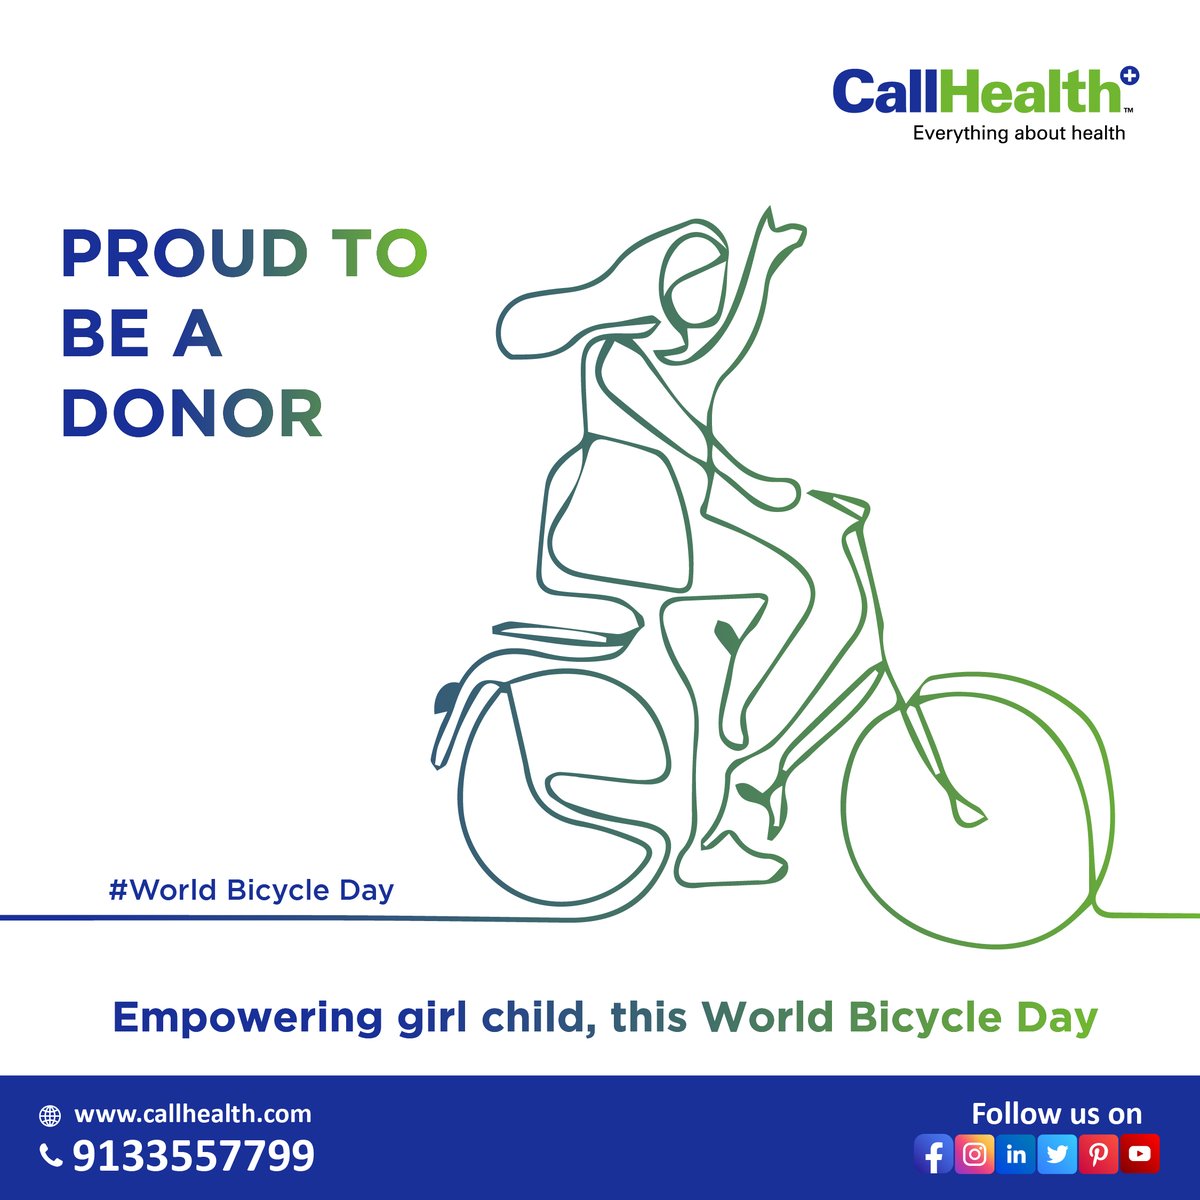 CallHealth is happy to donate cycles to girl children on #WorldBicycleDay 

#worldbicycleday #girlchildempowerment #girlchild #girlchildeducation #education 
#CallHealth - #EverythingAboutHealth